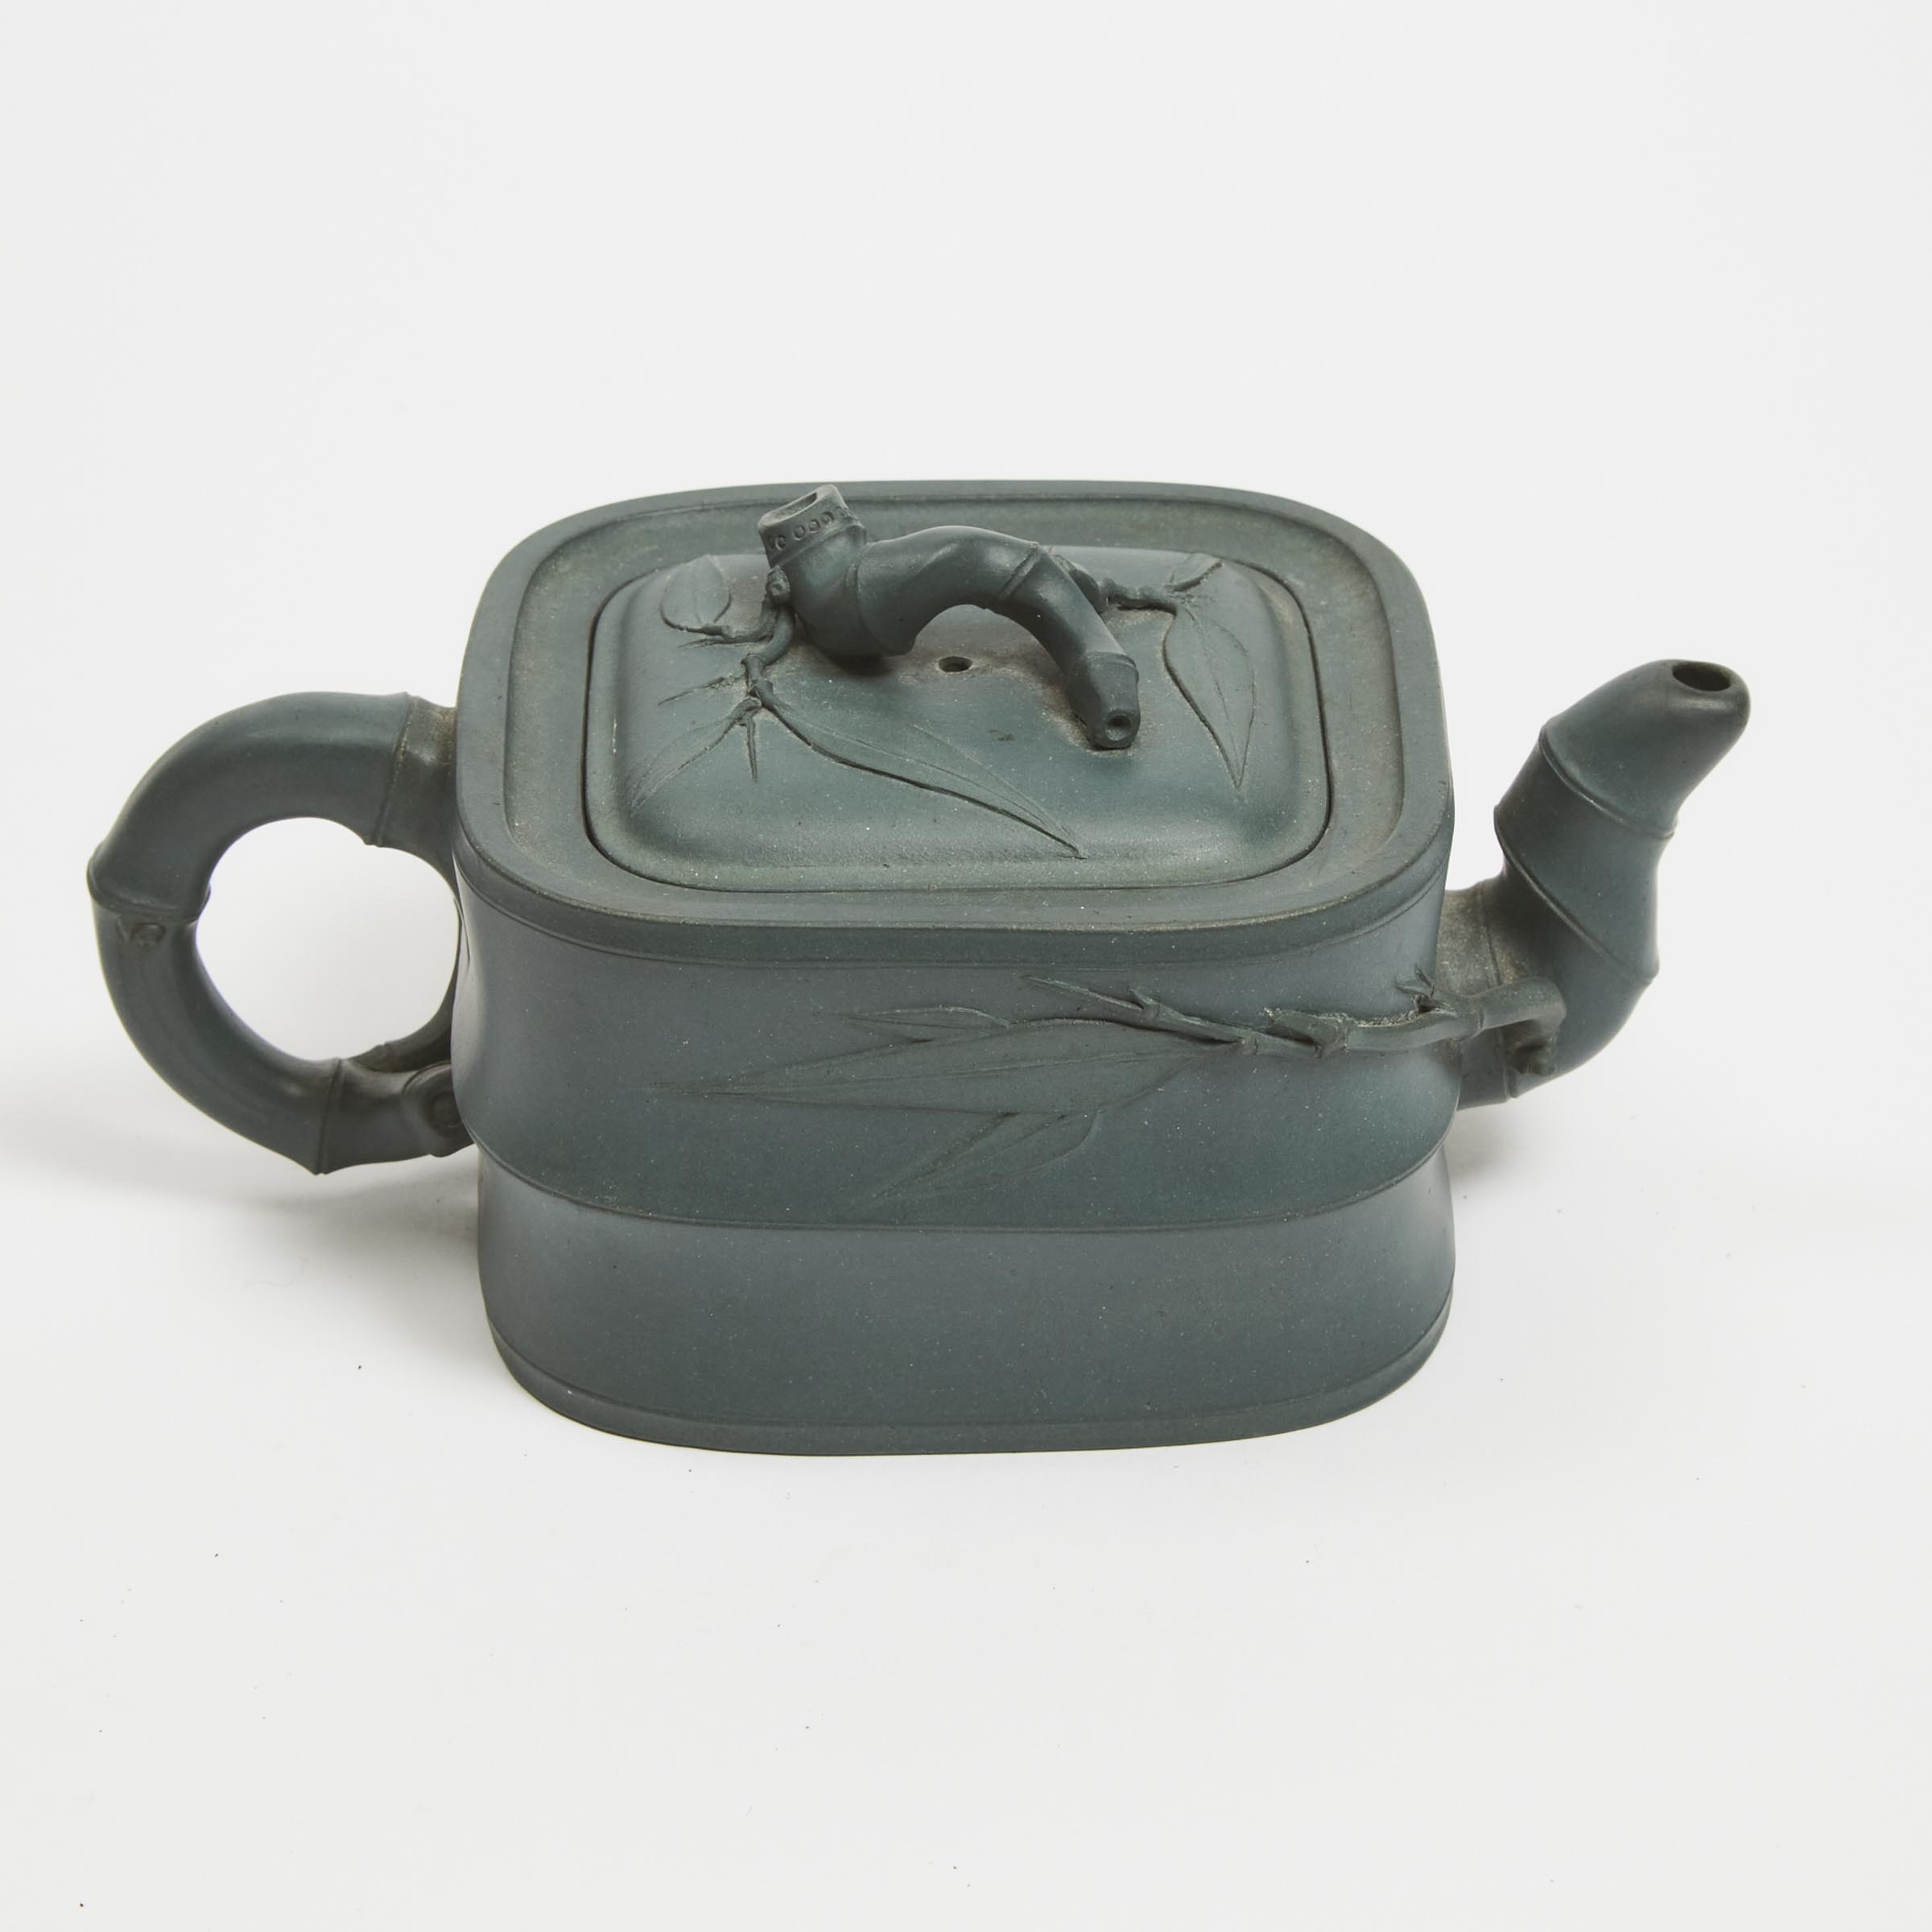 A Green Yixing/Zisha Imitation-Bamboo Square Teapot, Republican Period, Early 20th Century